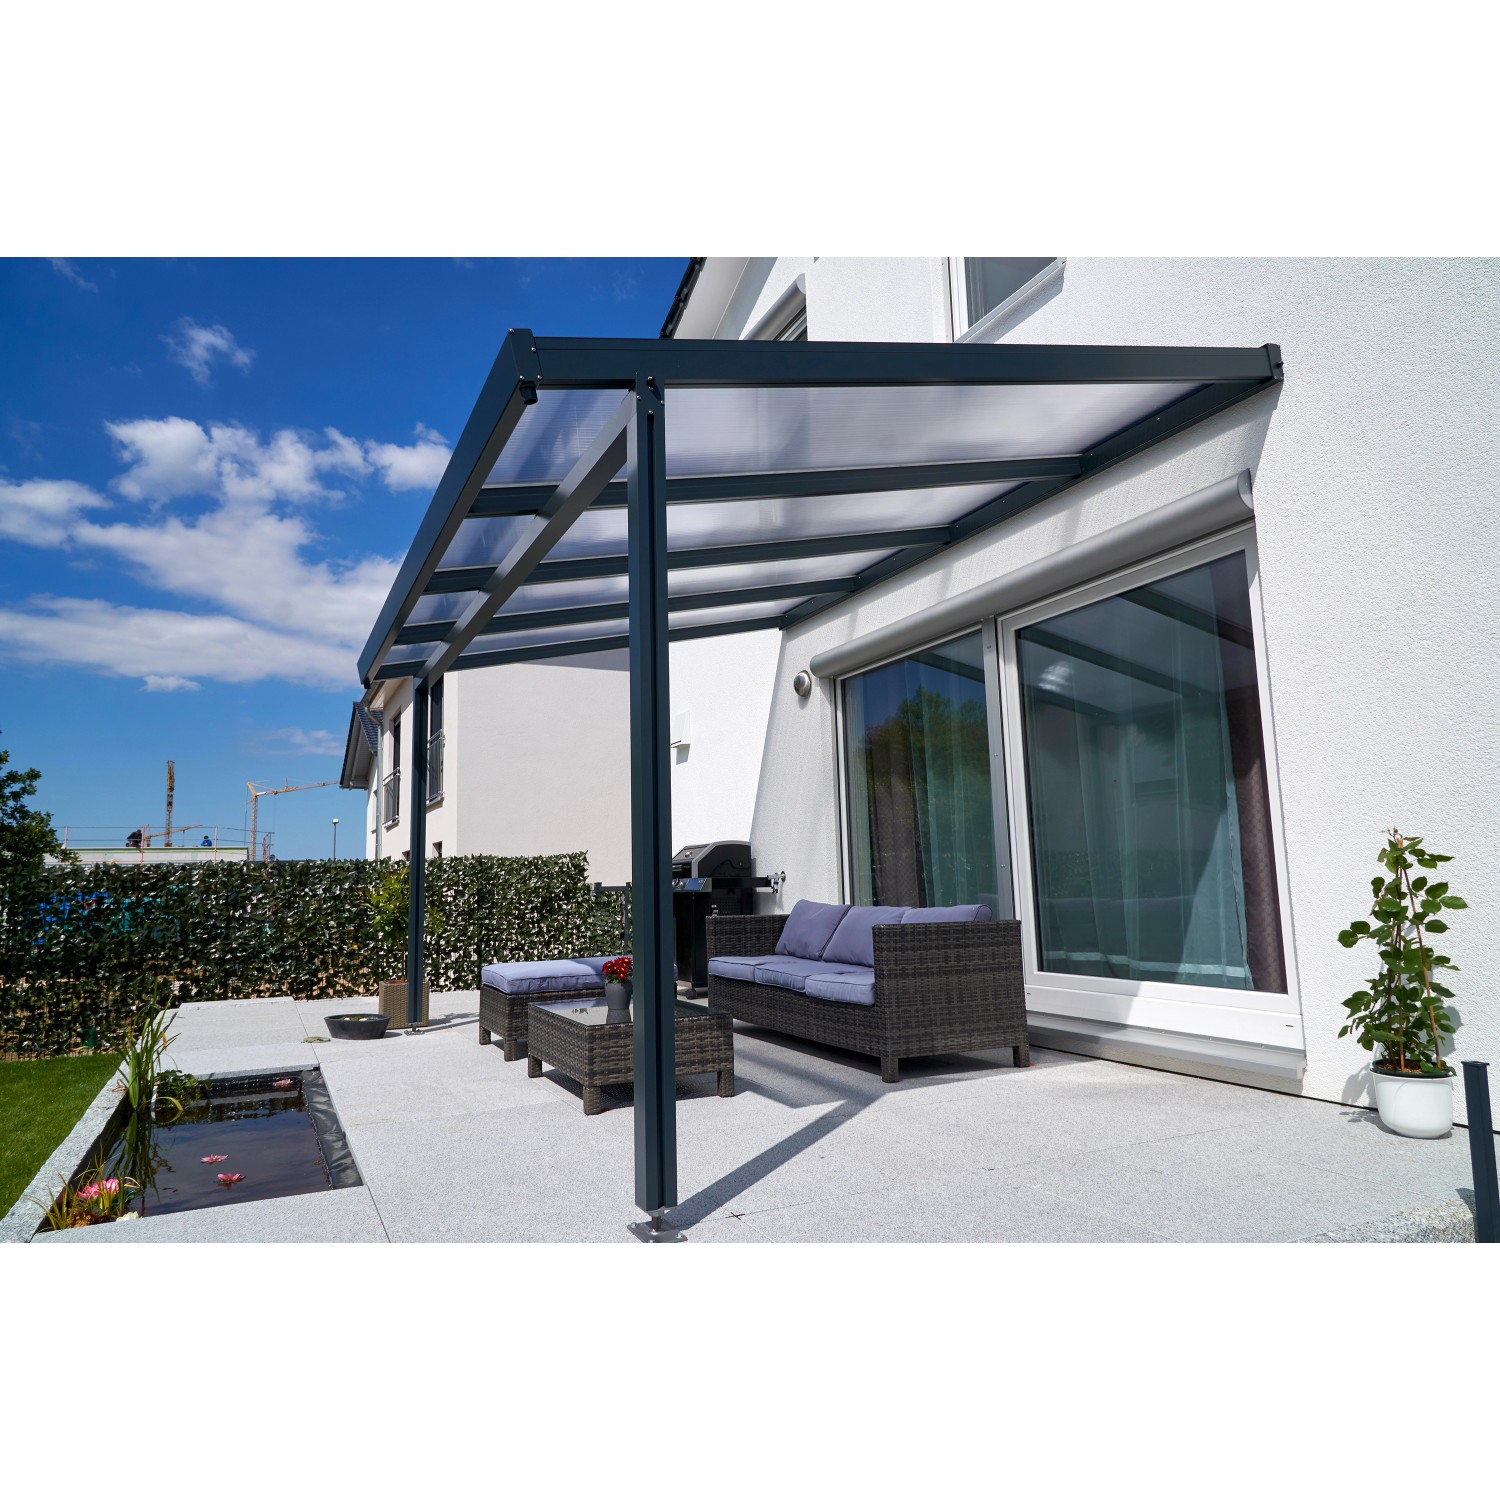 Terrassenüberdachung Premium (BxT) Klar OBI bei x cm 410 Anthrazit Polycarbonat 306 kaufen cm